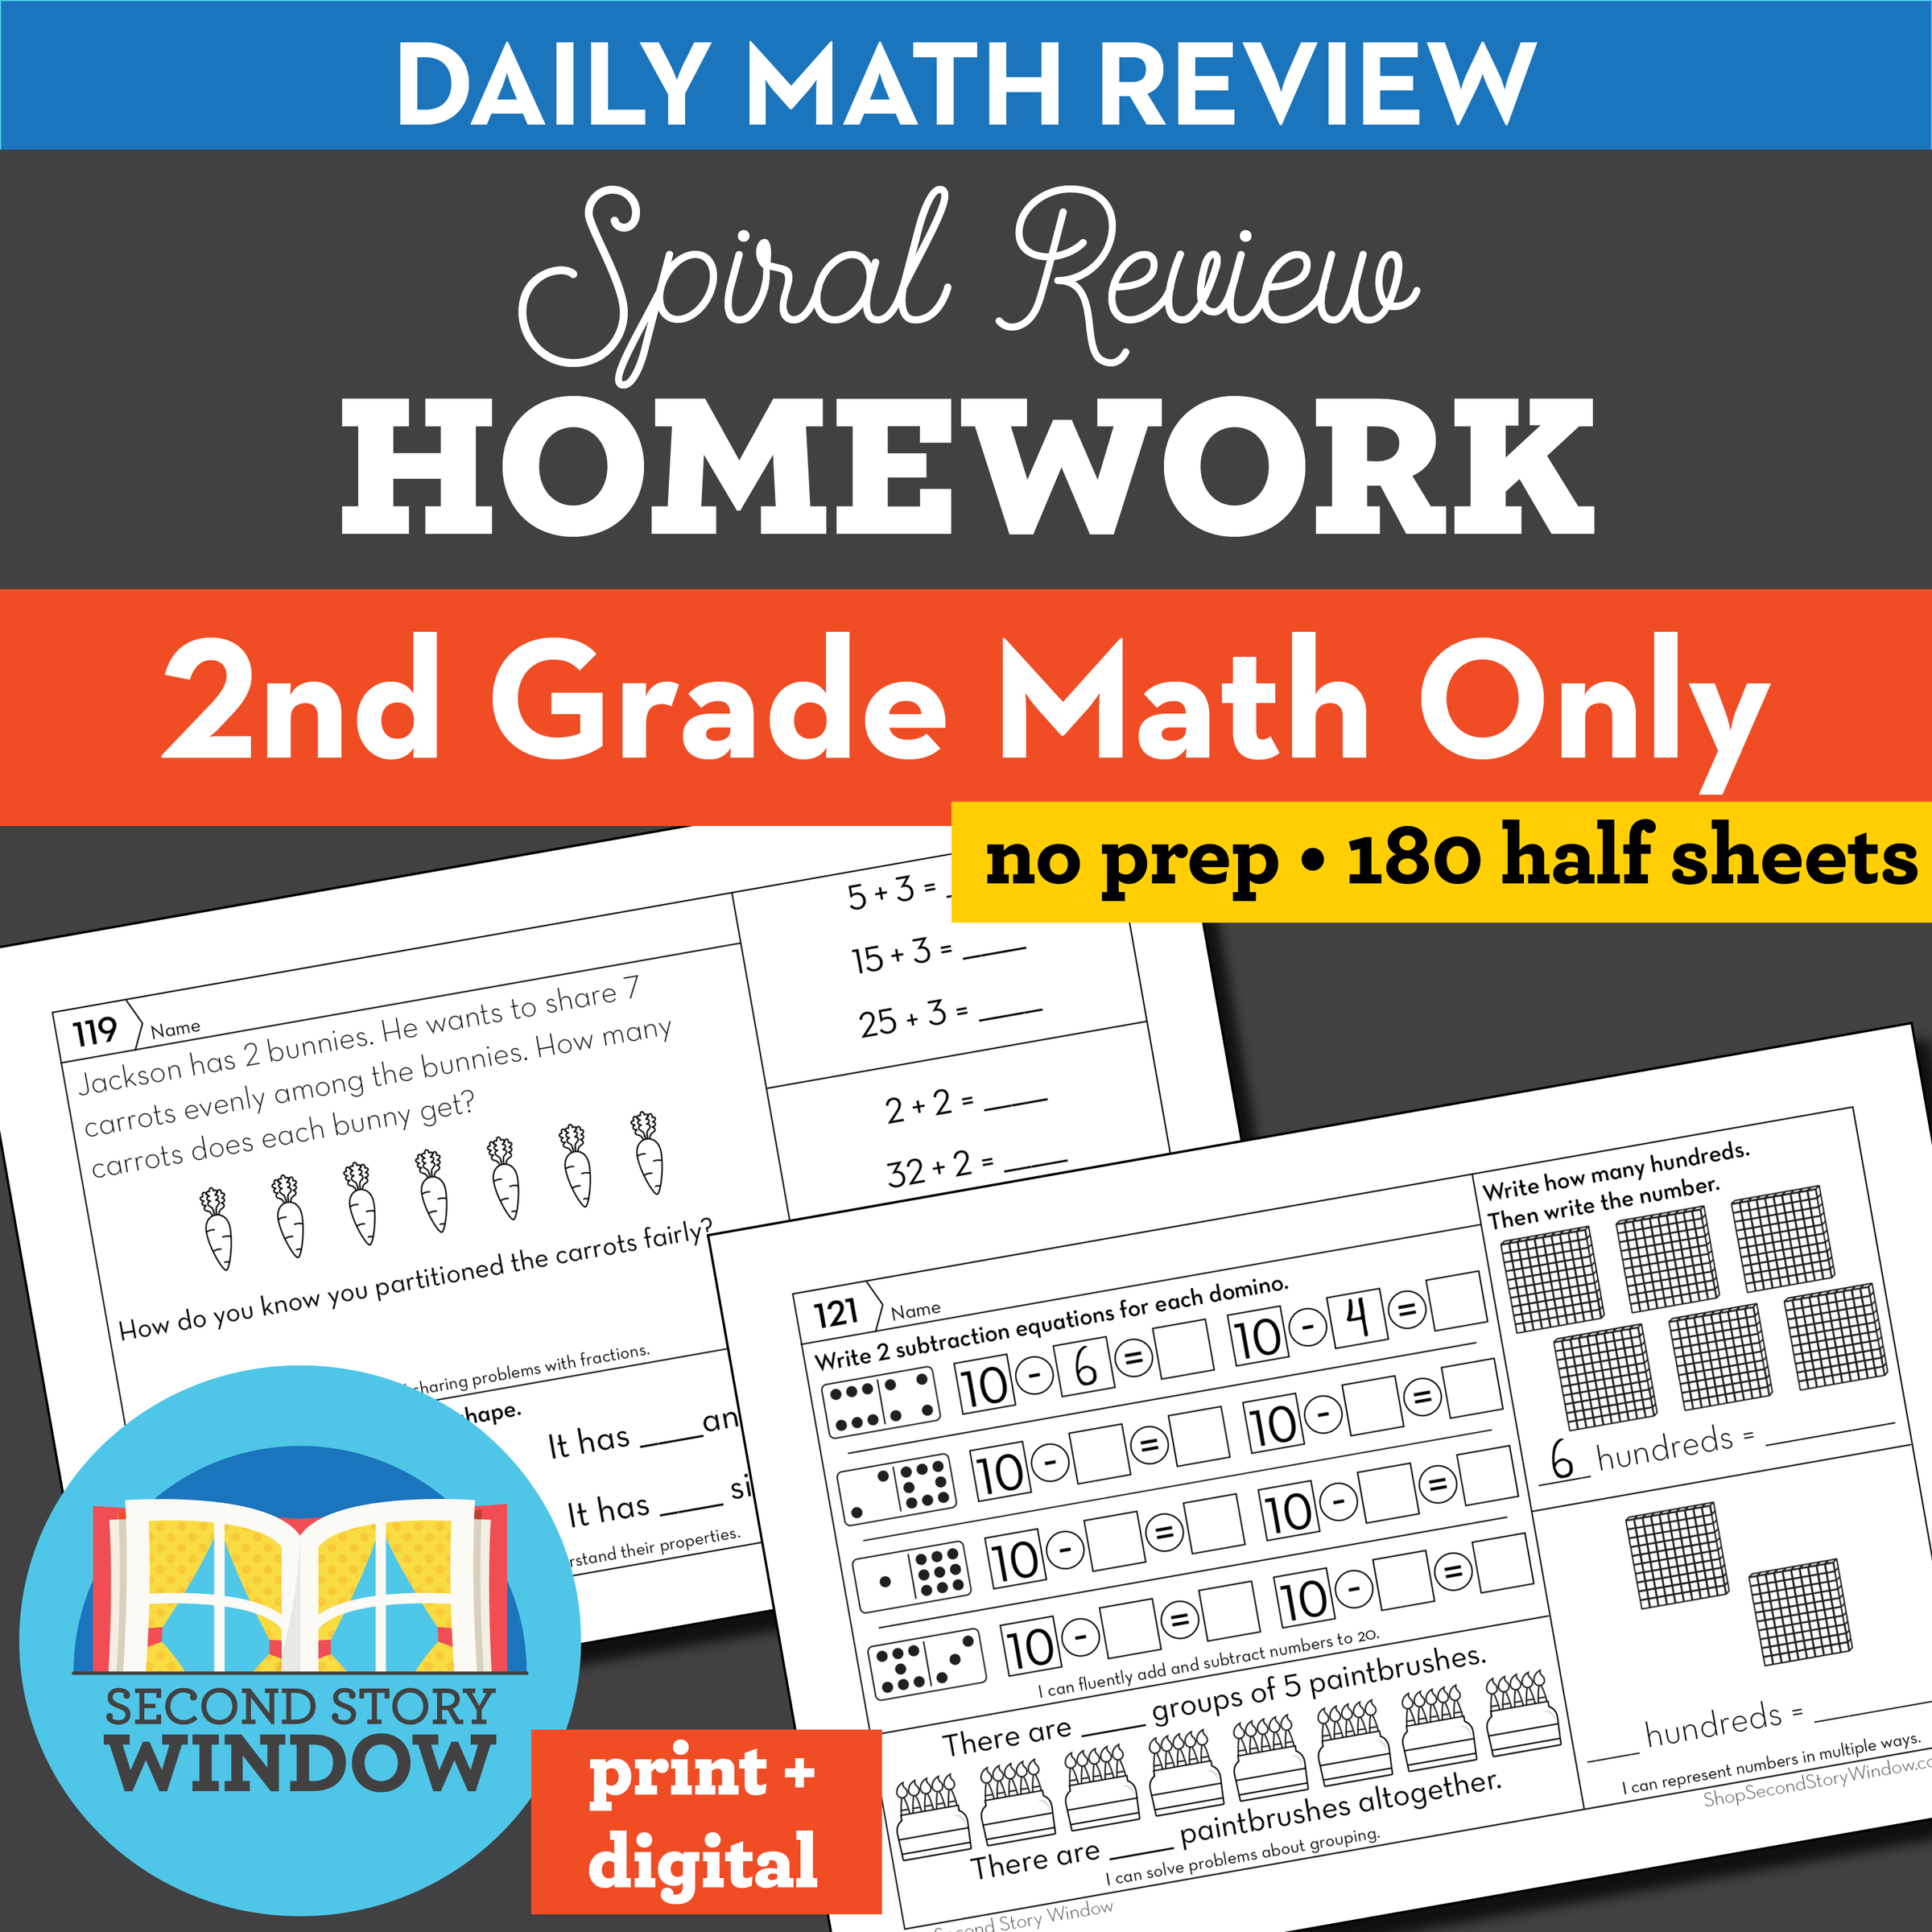 homework review 22 t8